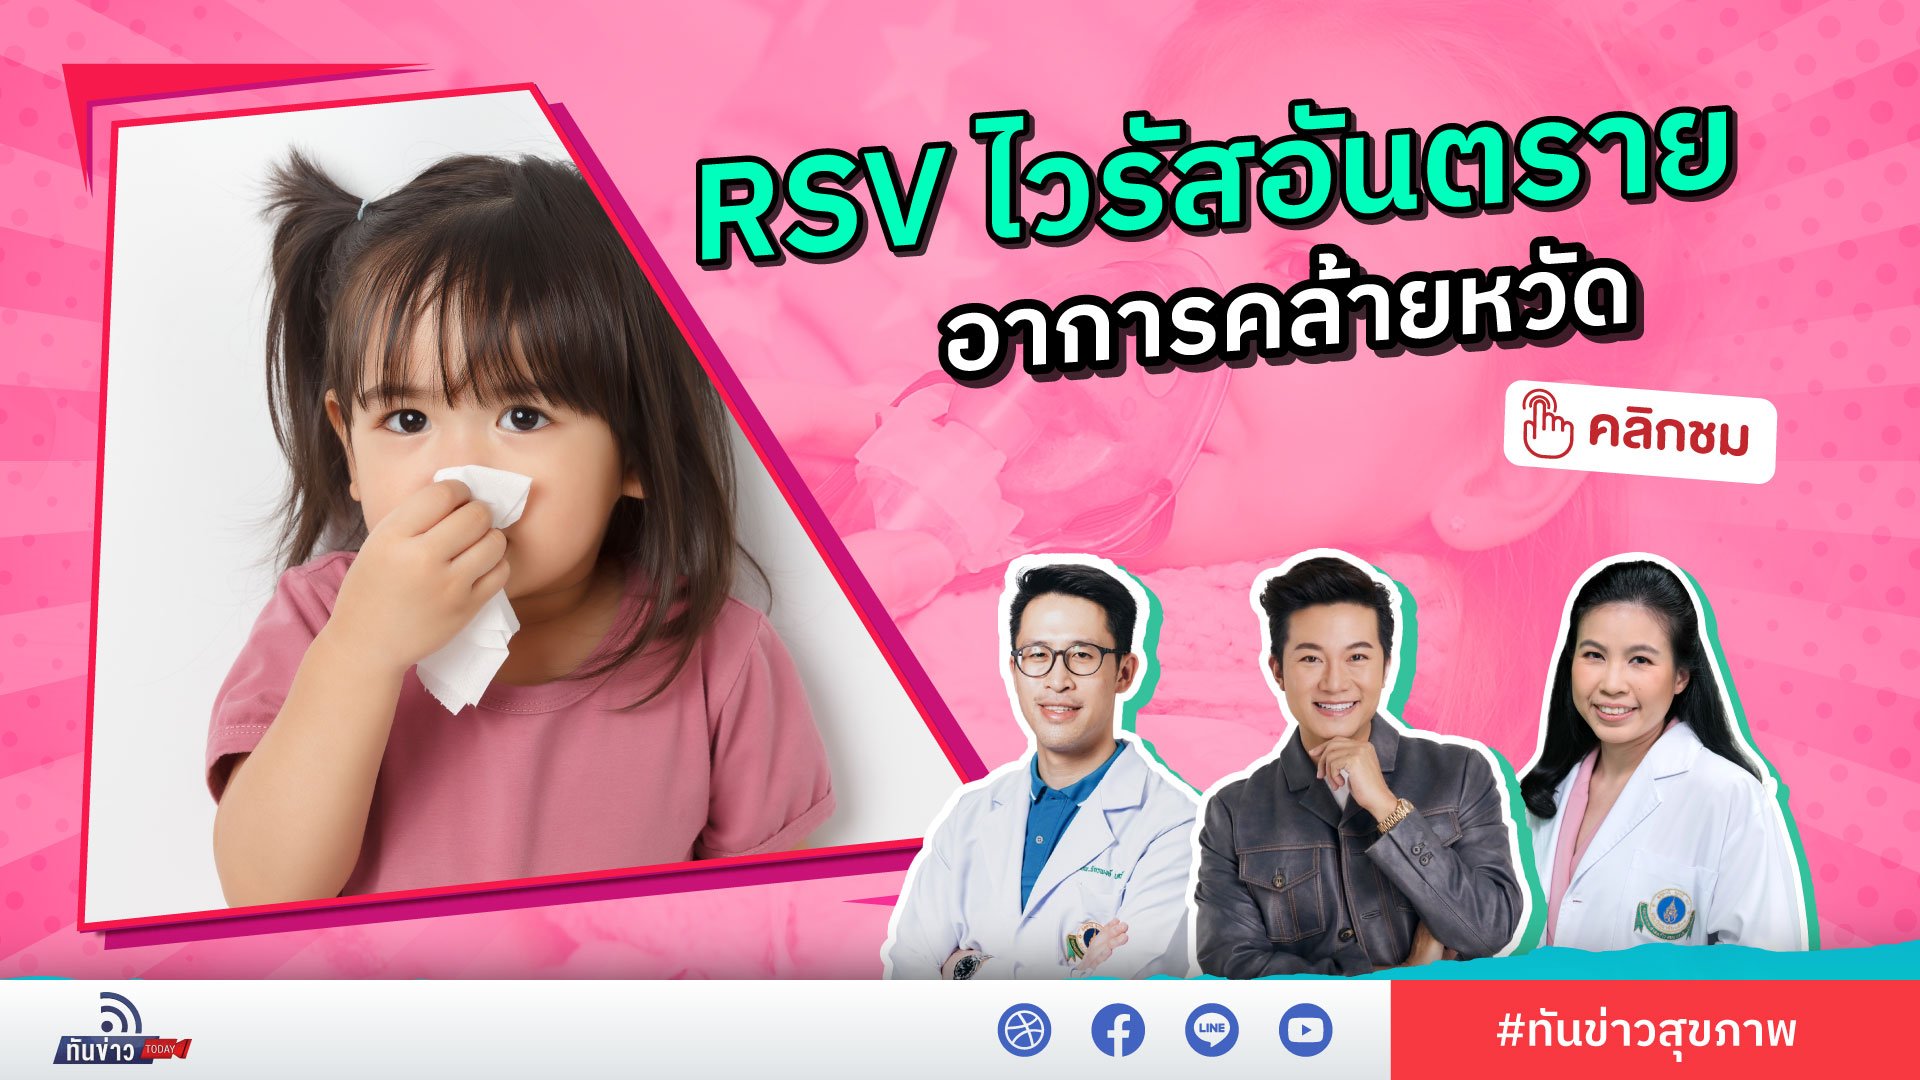 “RSV ไวรัสที่เป็นอันตรายต่อระบบทางเดินหายใจ